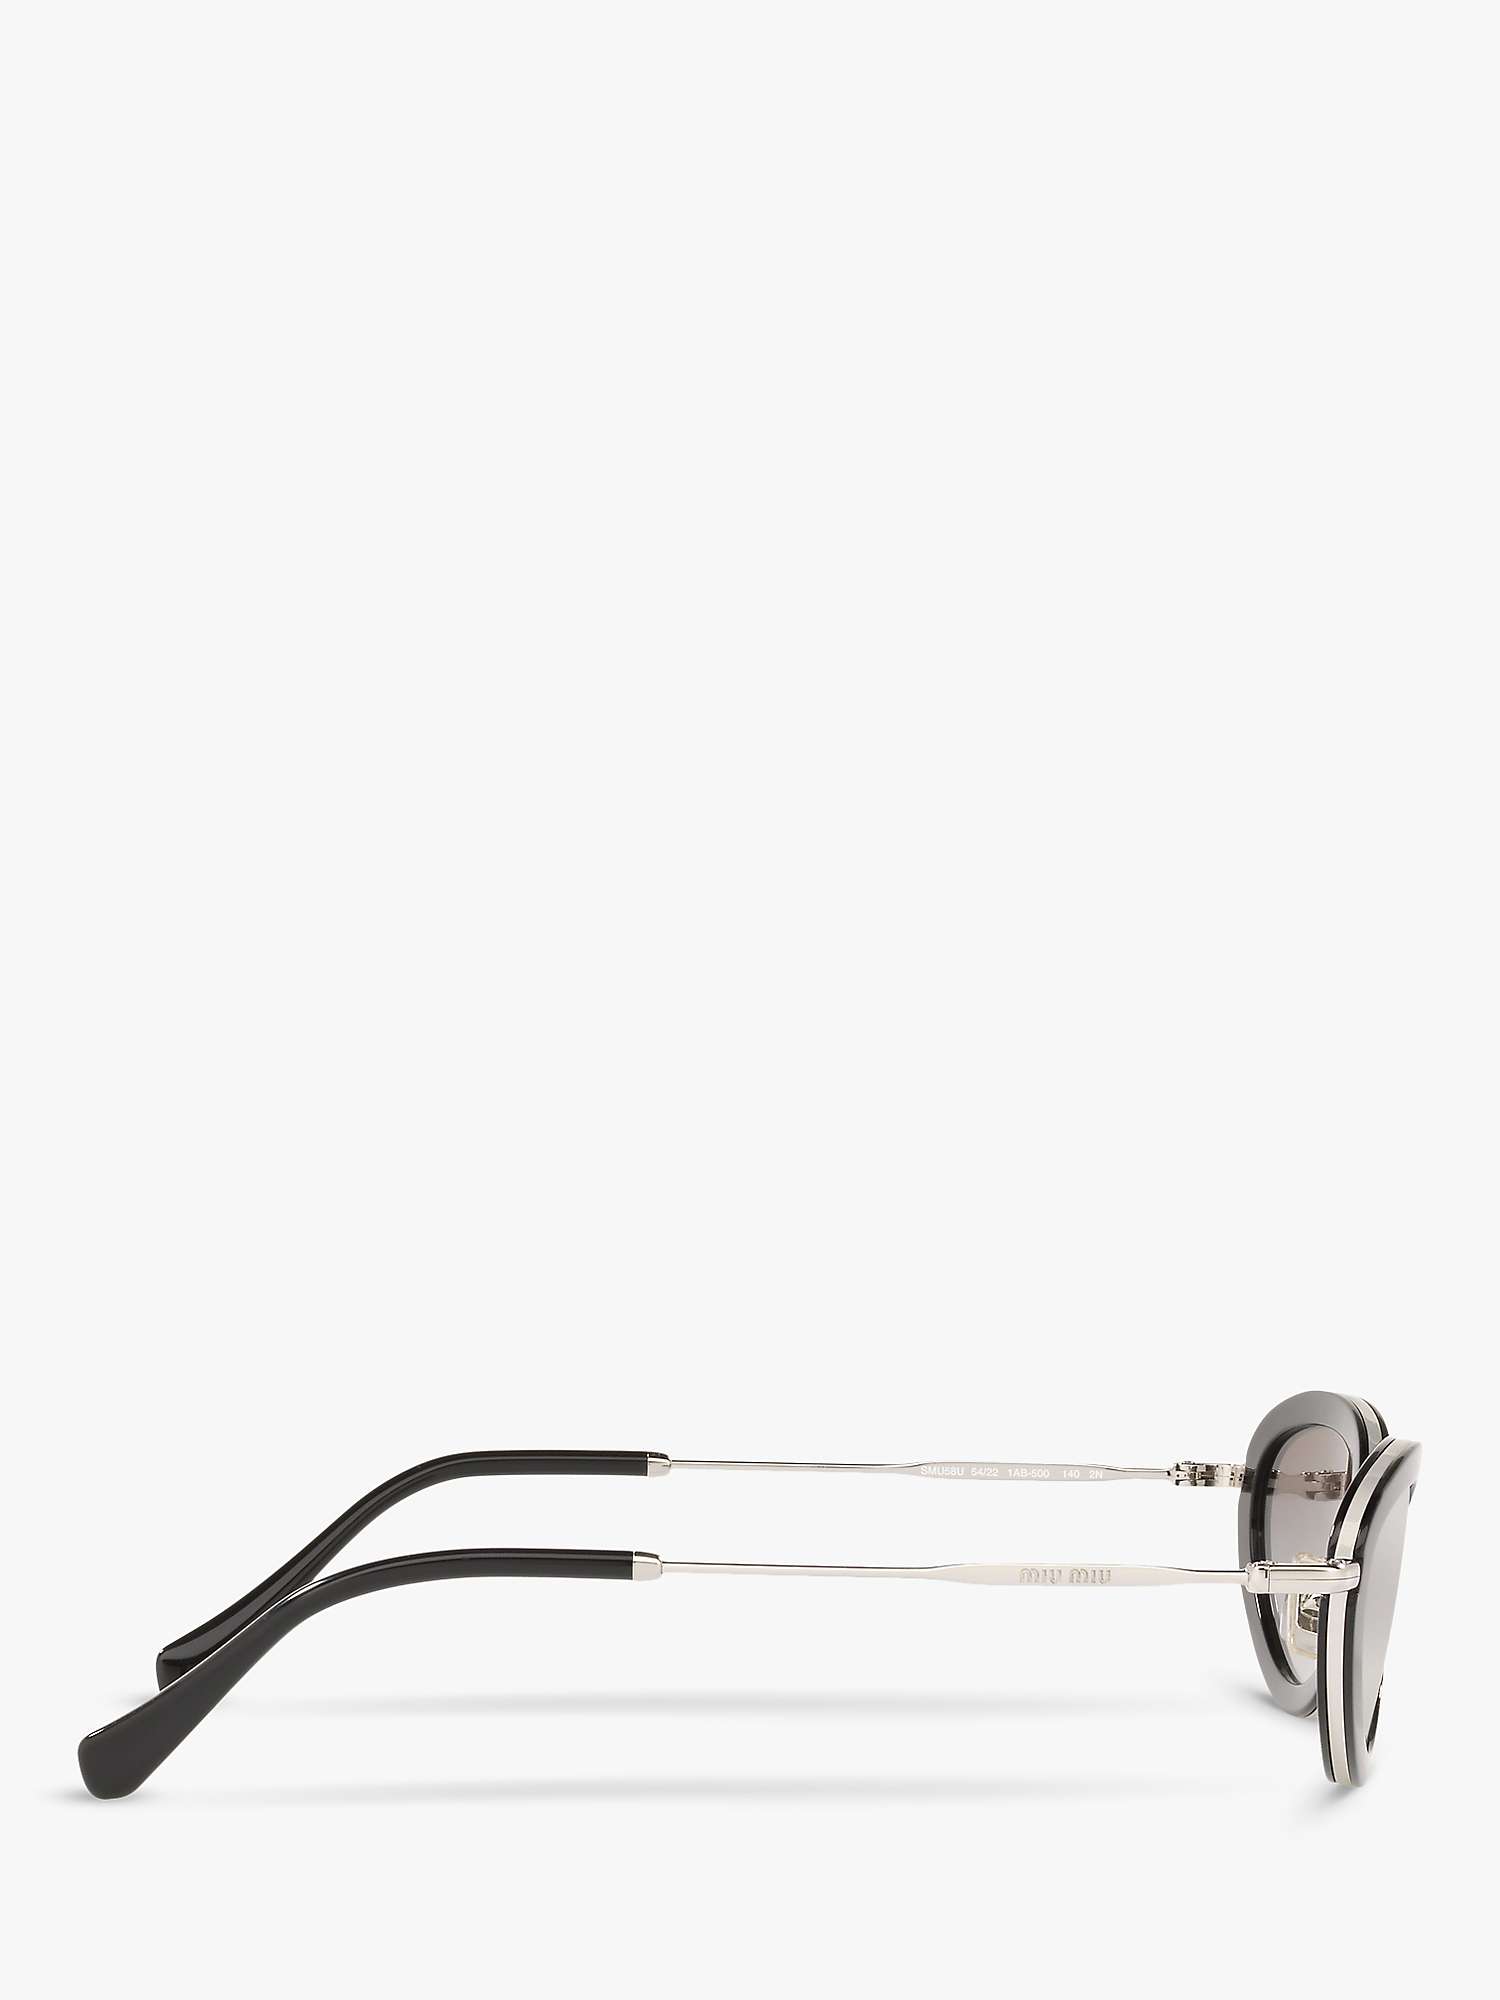 Buy Miu Miu MU 58US Women's Oval Sunglasses, Black/Mirror Grey Online at johnlewis.com